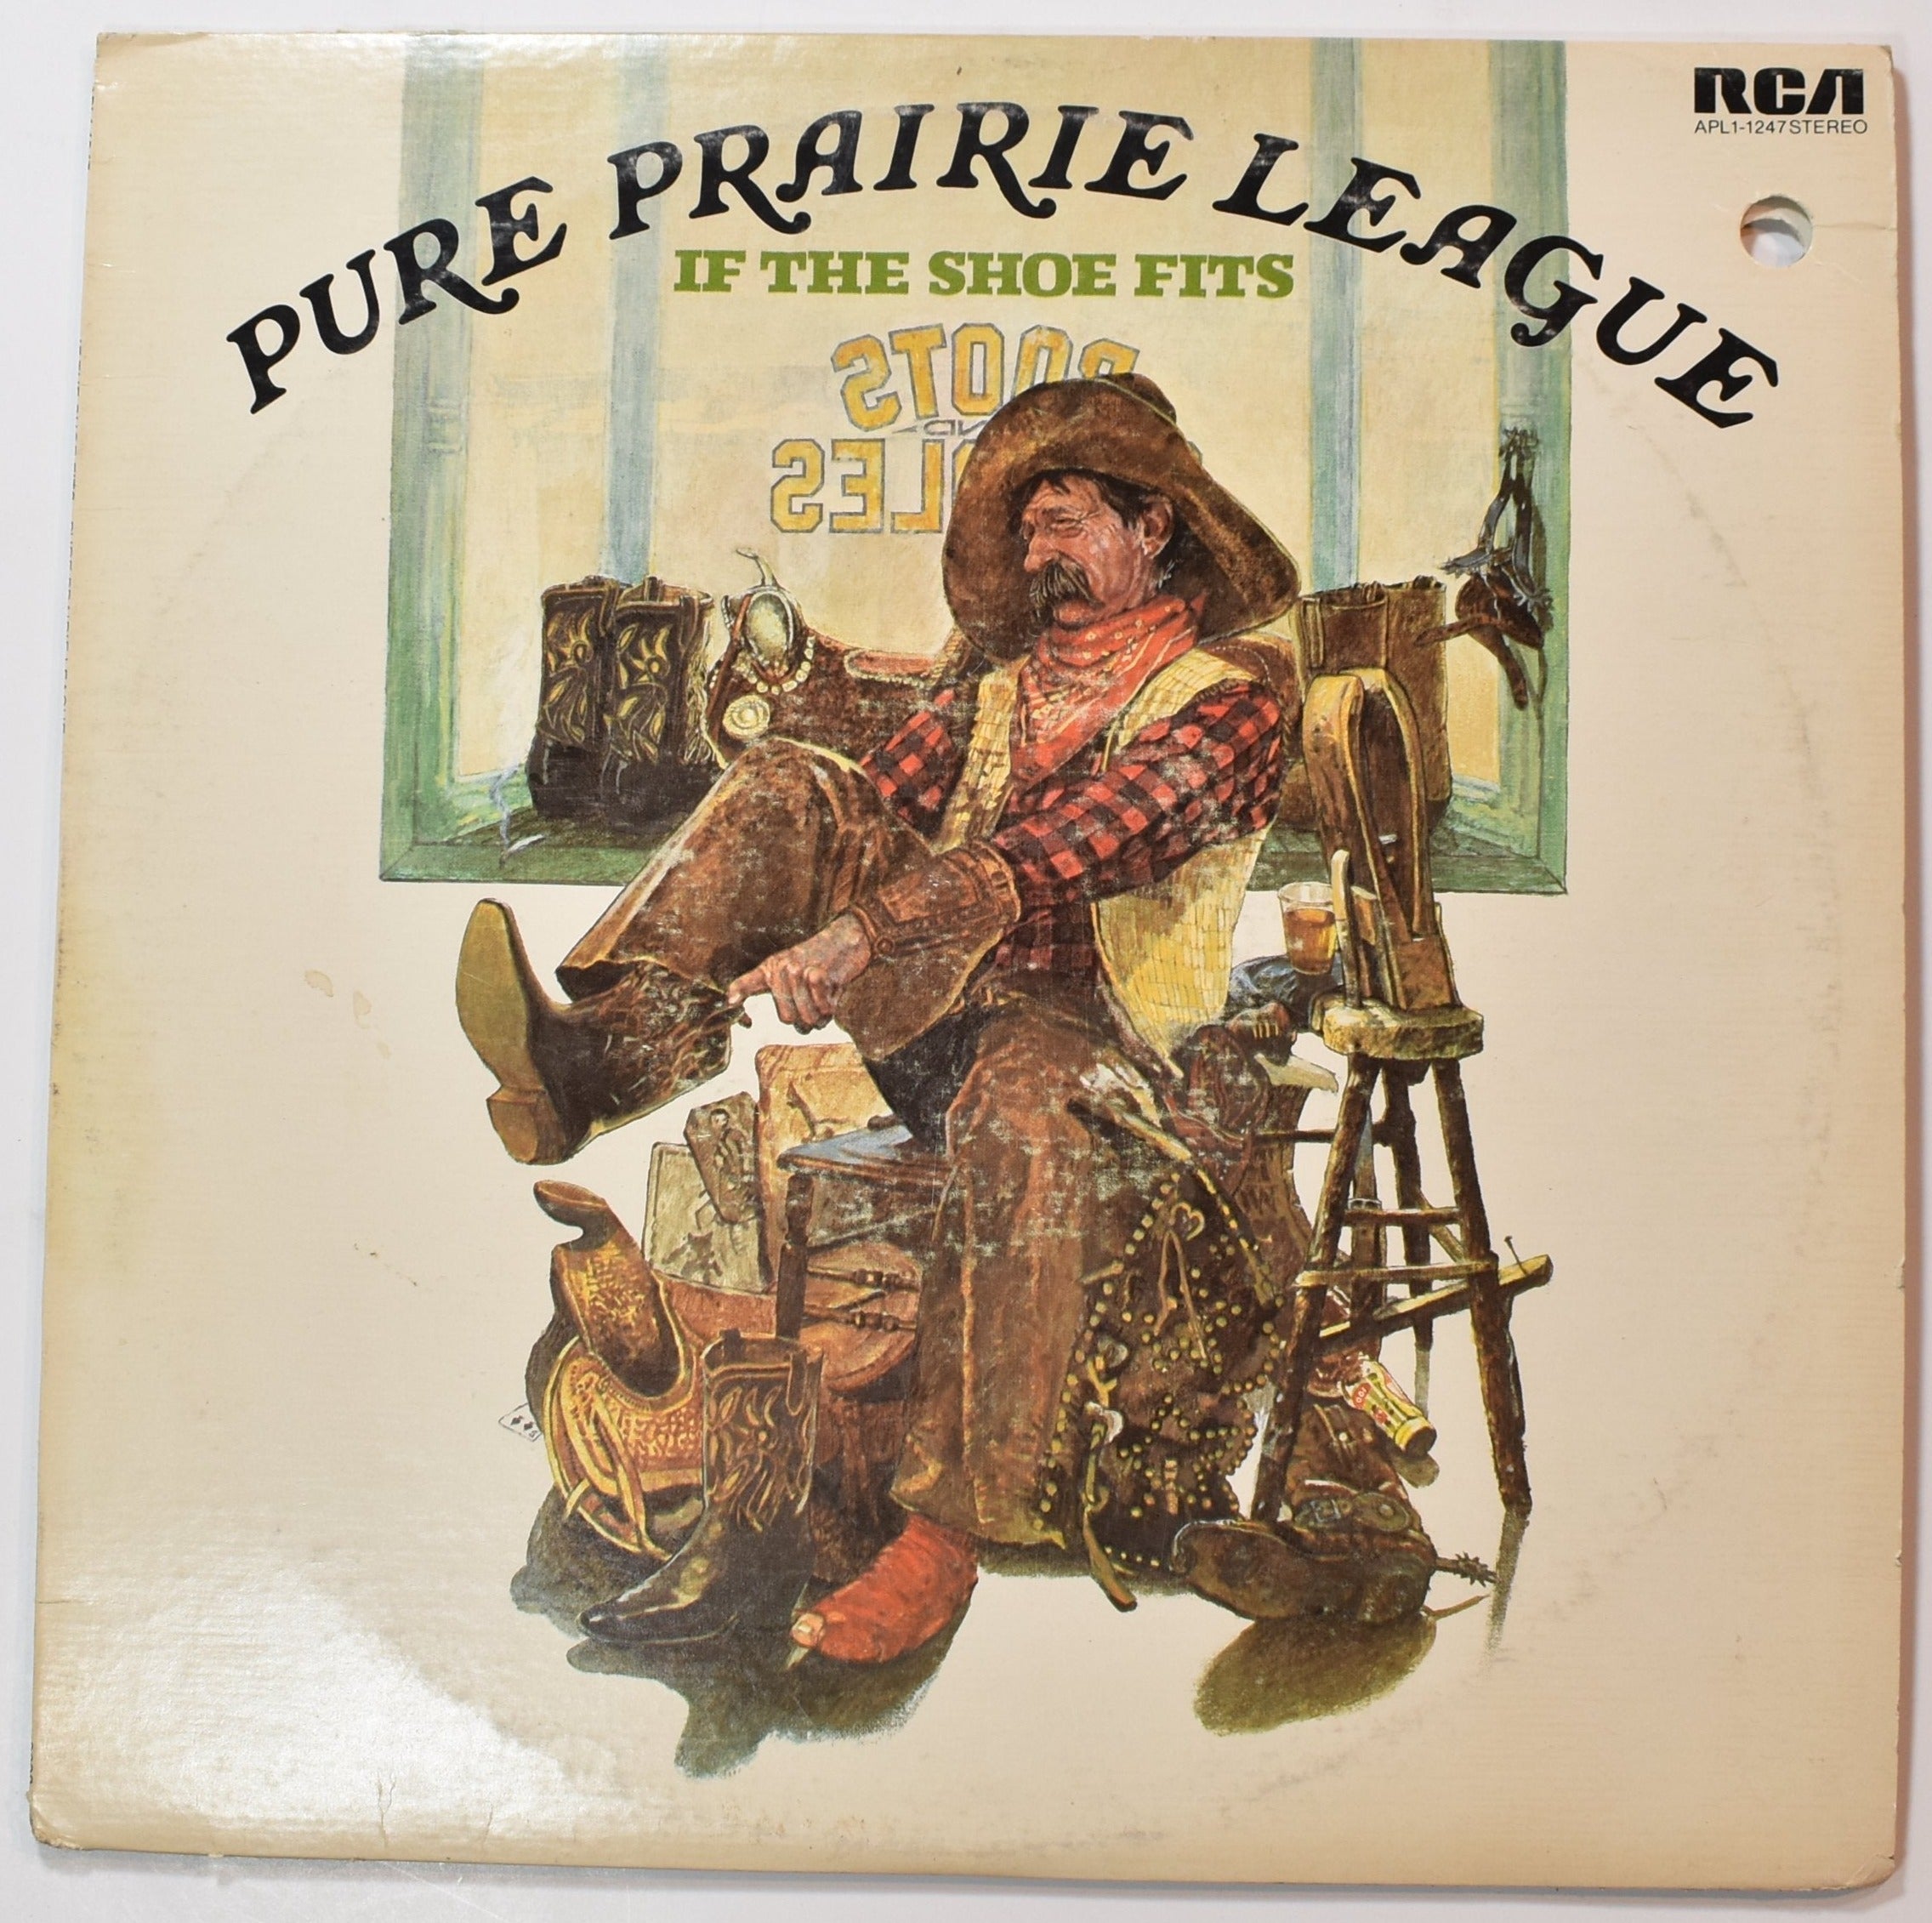 Vinyl Music Record Pure Prairie League Vinyl record If the shoe fits